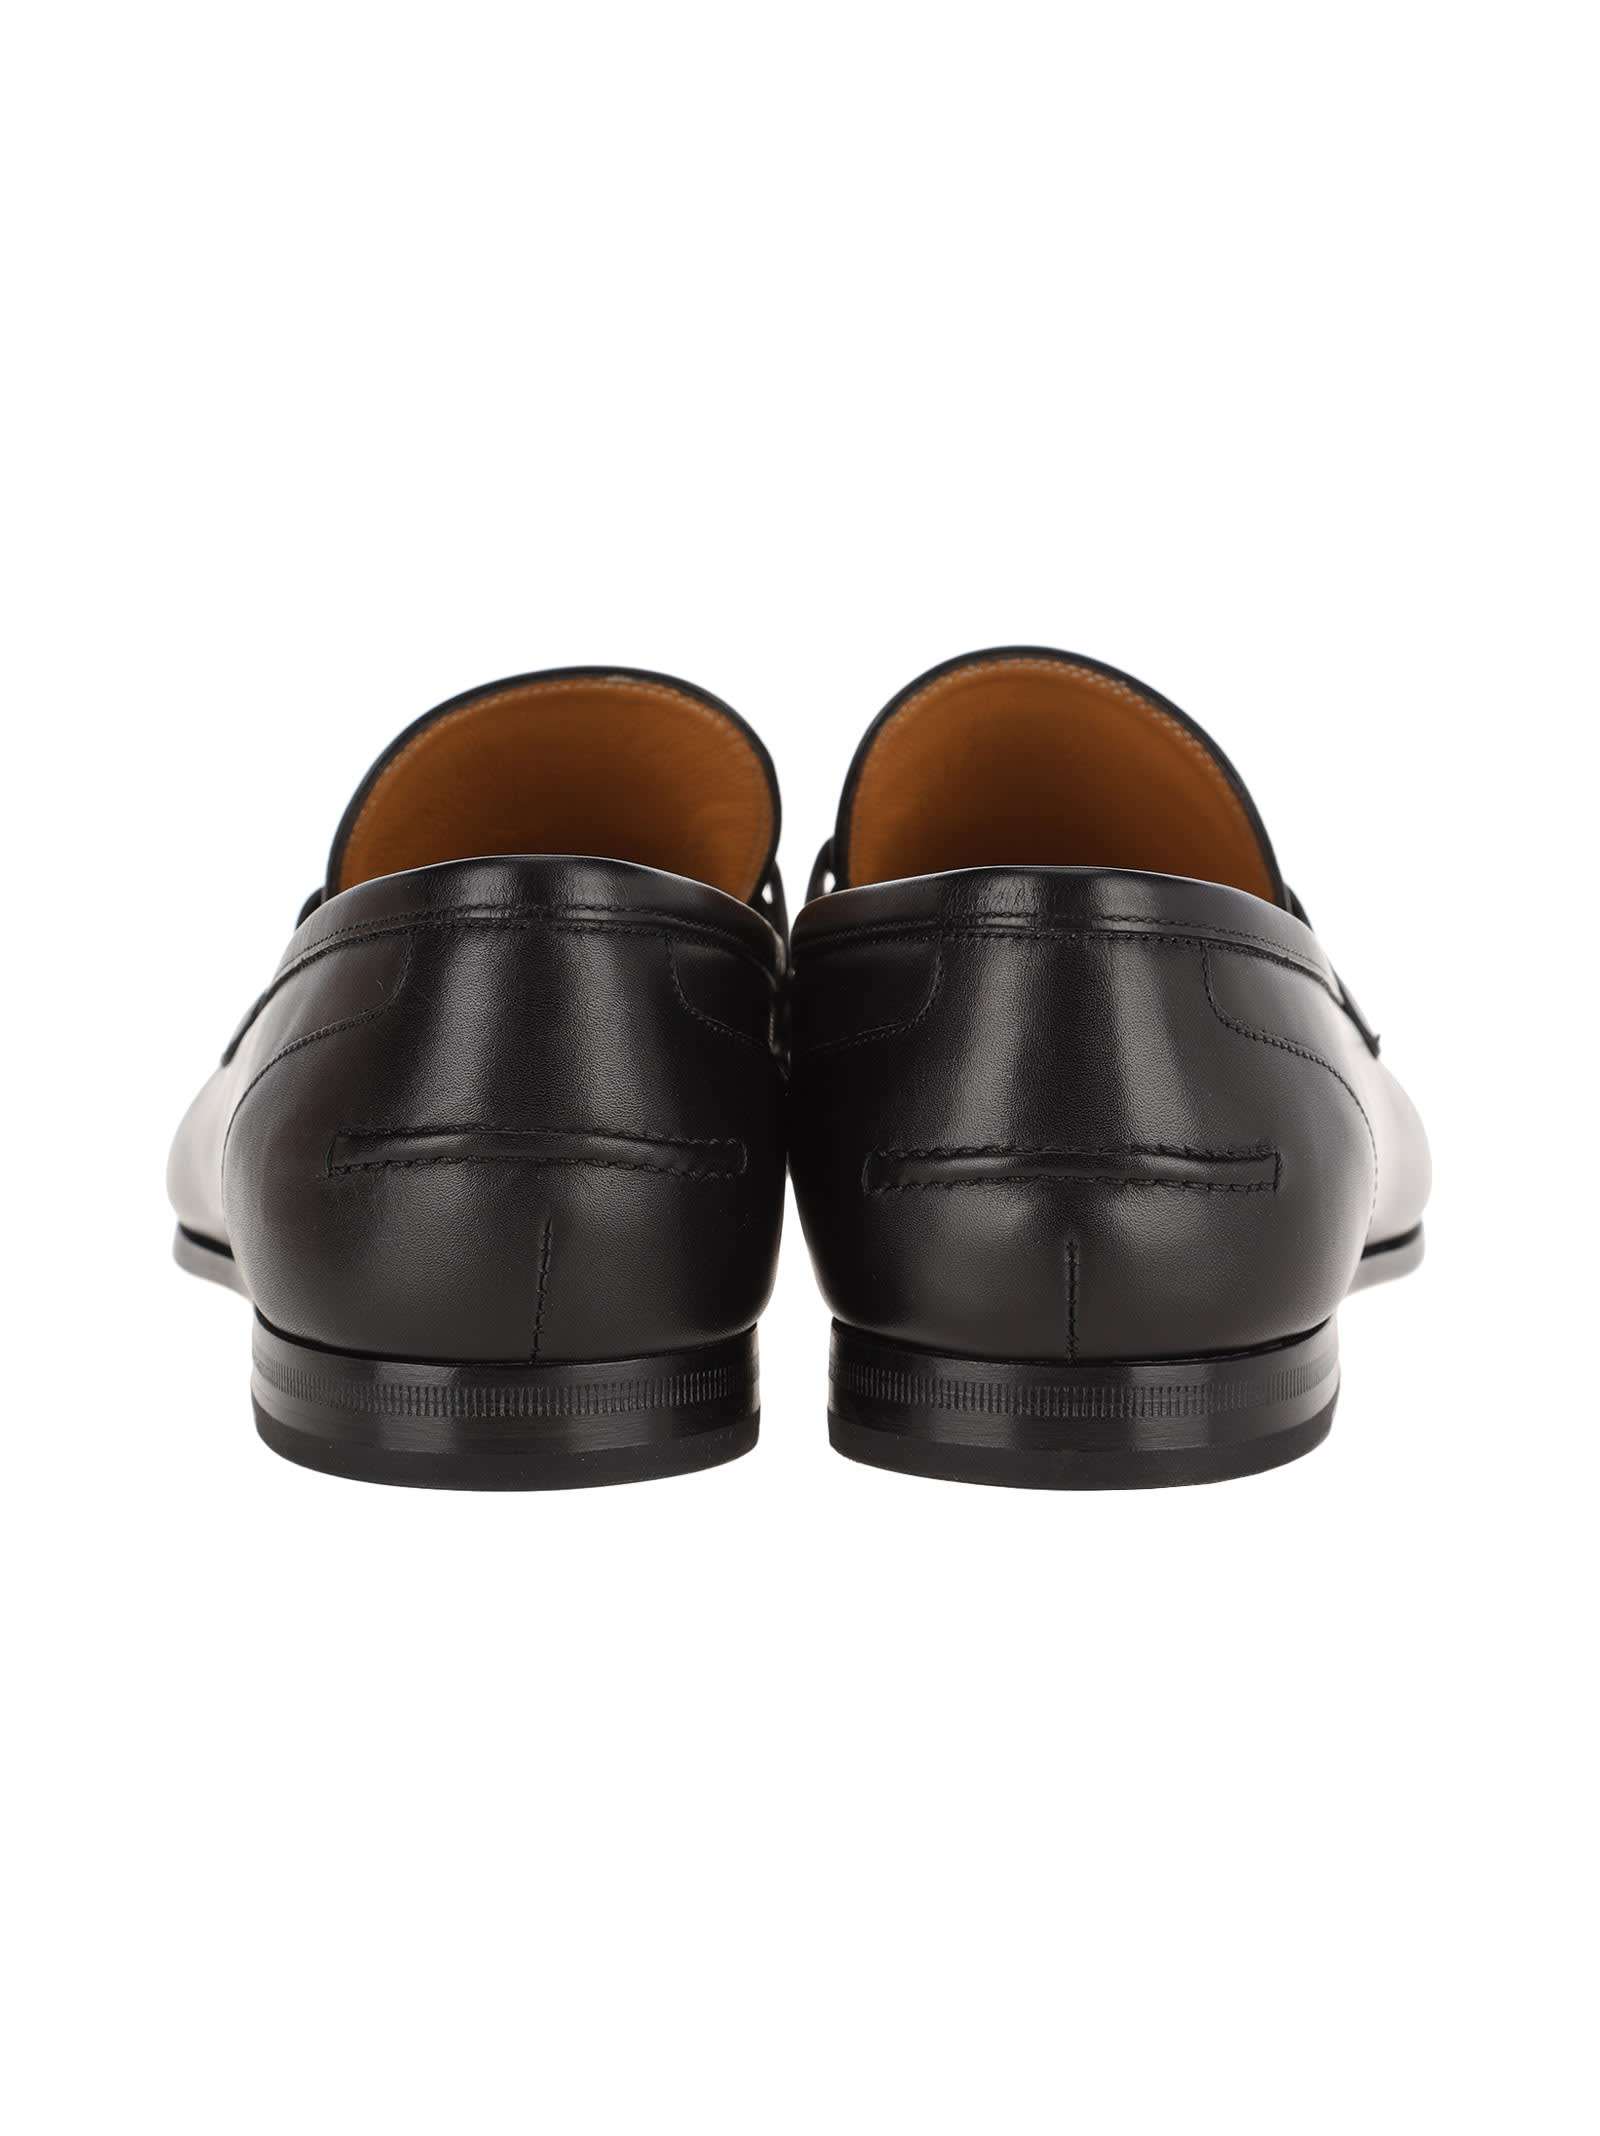 gucci jordaan leather loafer sale